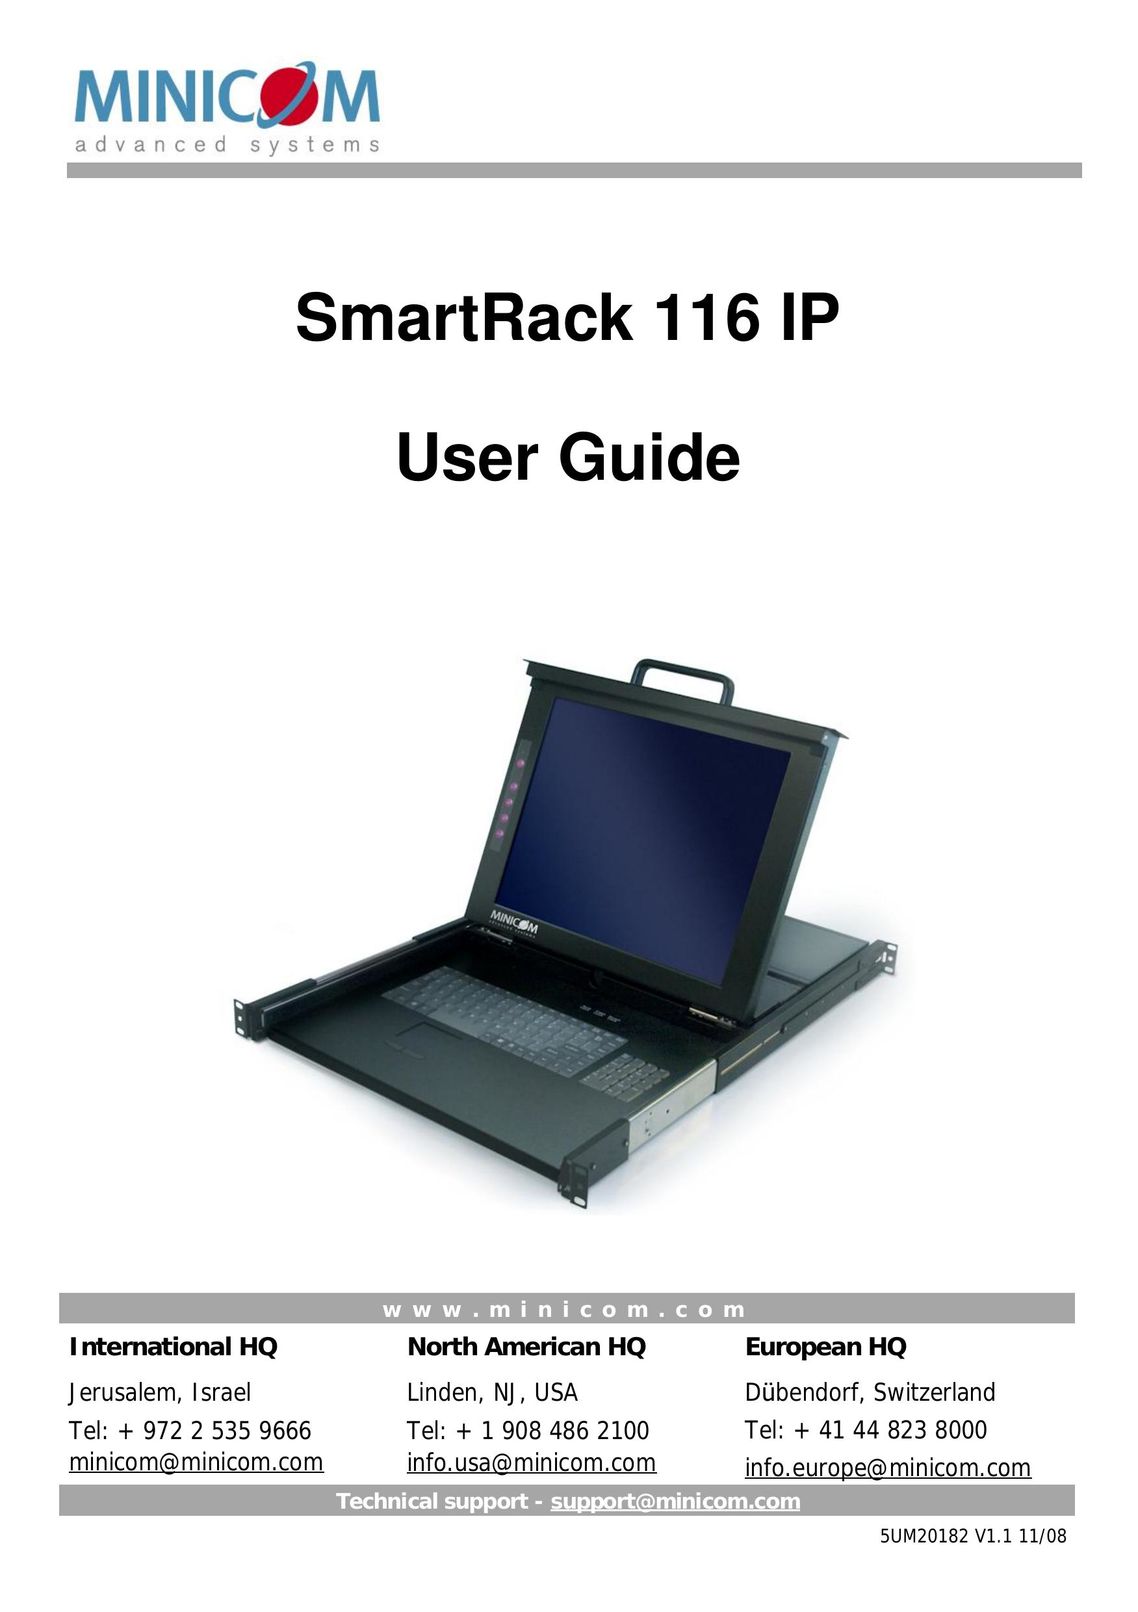 Minicom Advanced Systems 116 IP Computer Accessories User Manual